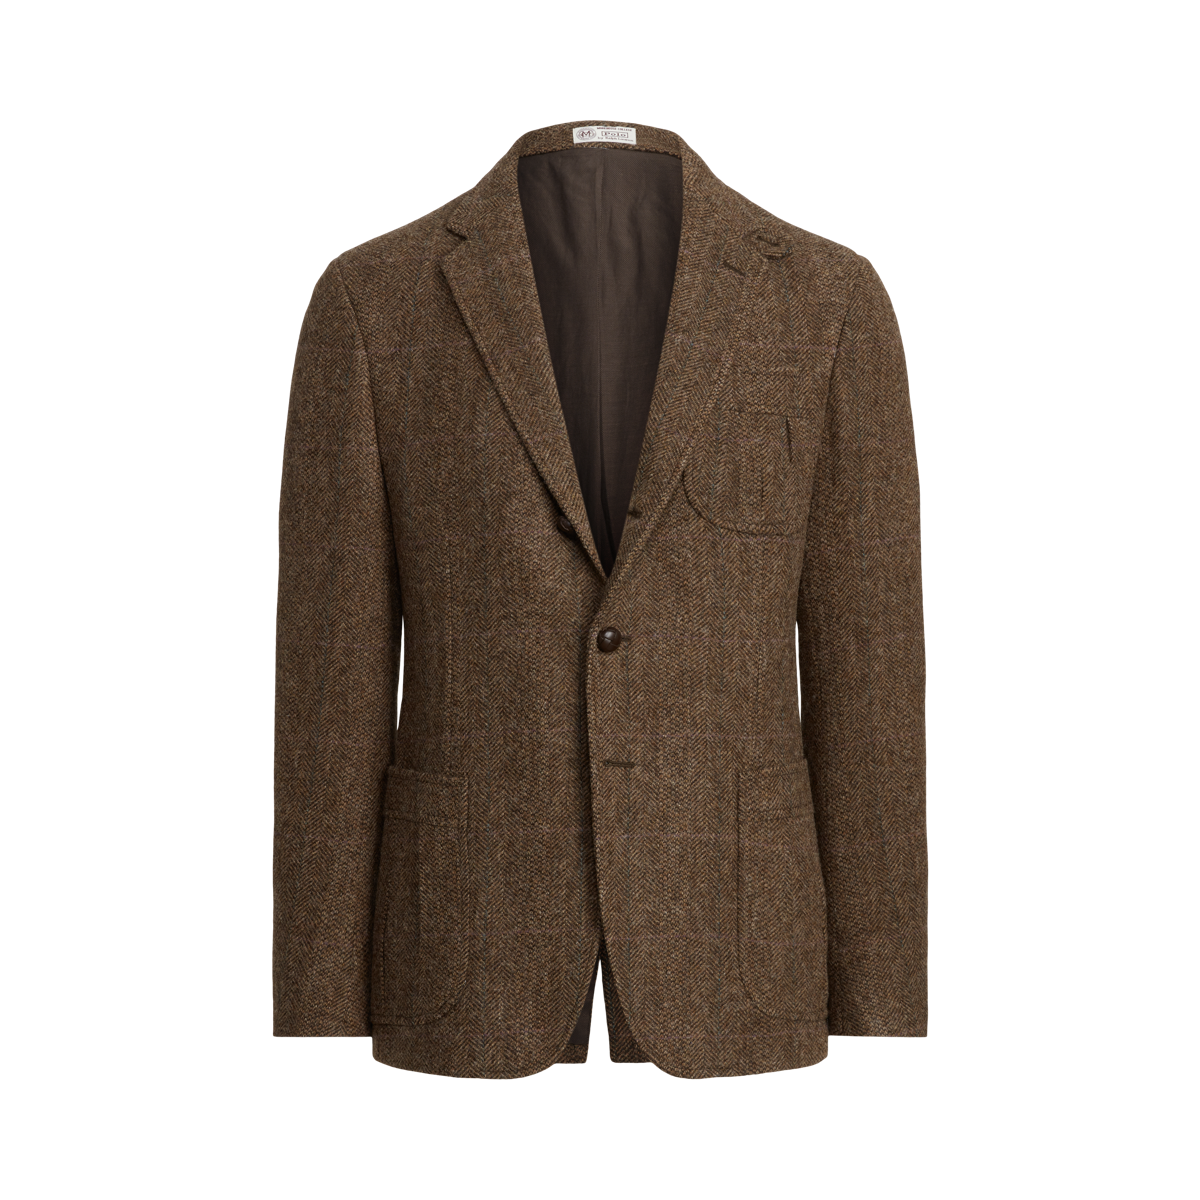 The Morehouse Collection Tweed Jacket | Ralph Lauren